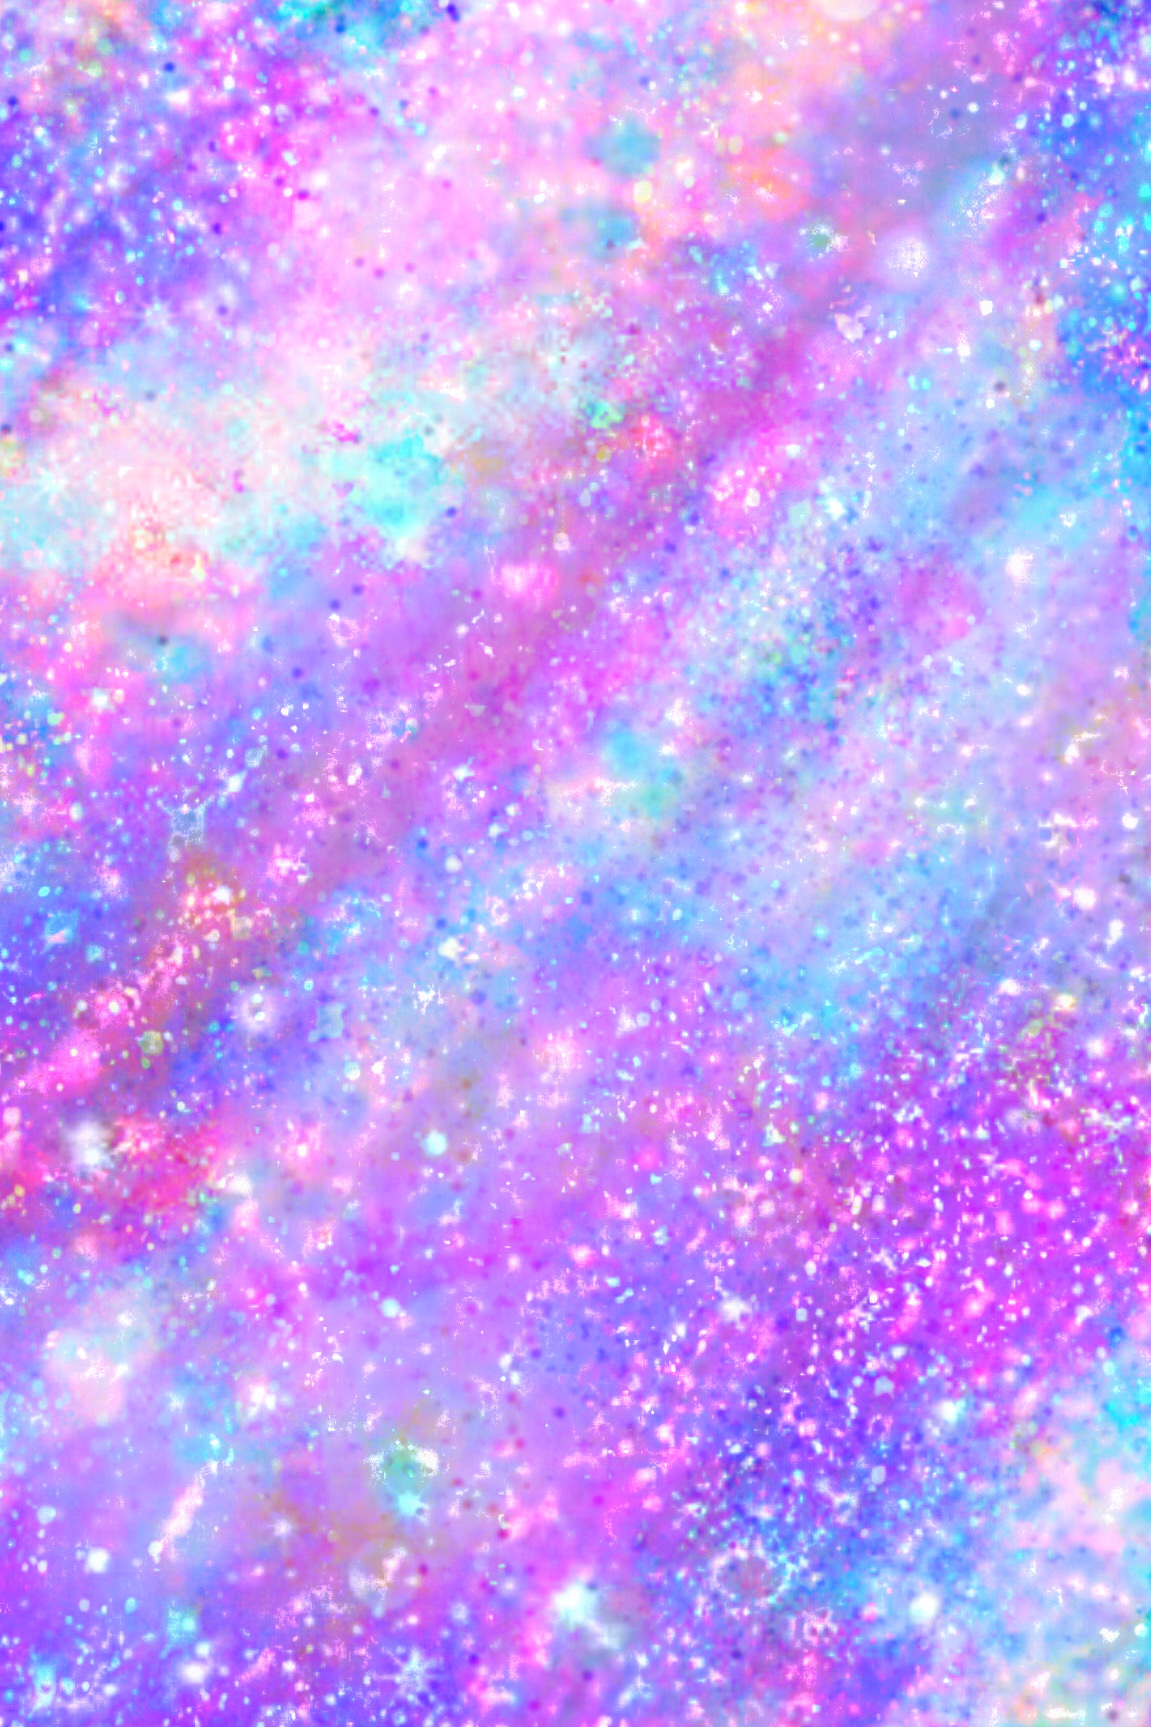 #freetoedit @mpink88 #glitter #sparkle #galaxy #sky #stars #shimmer #holographic #glitz #pastel #purple #confetti #stripes #pattern #bokeh #art #wallpaper 